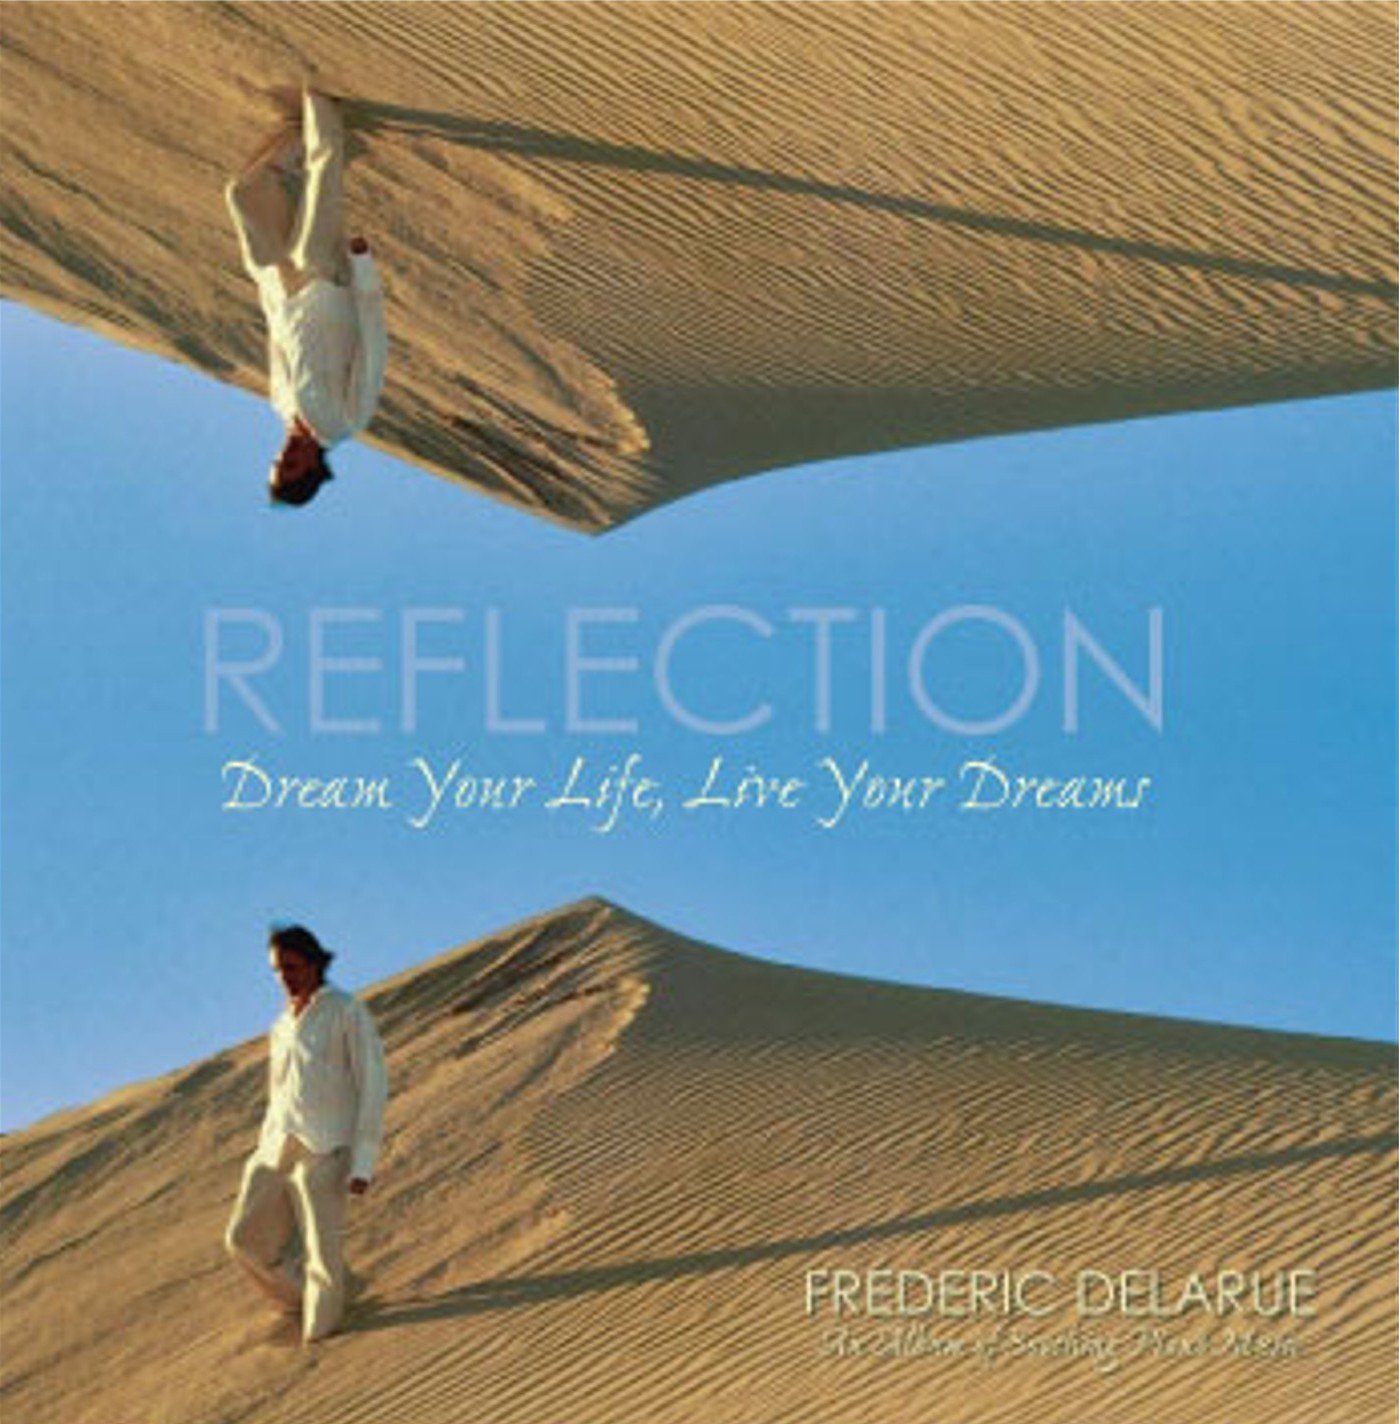 chamber of reflection album